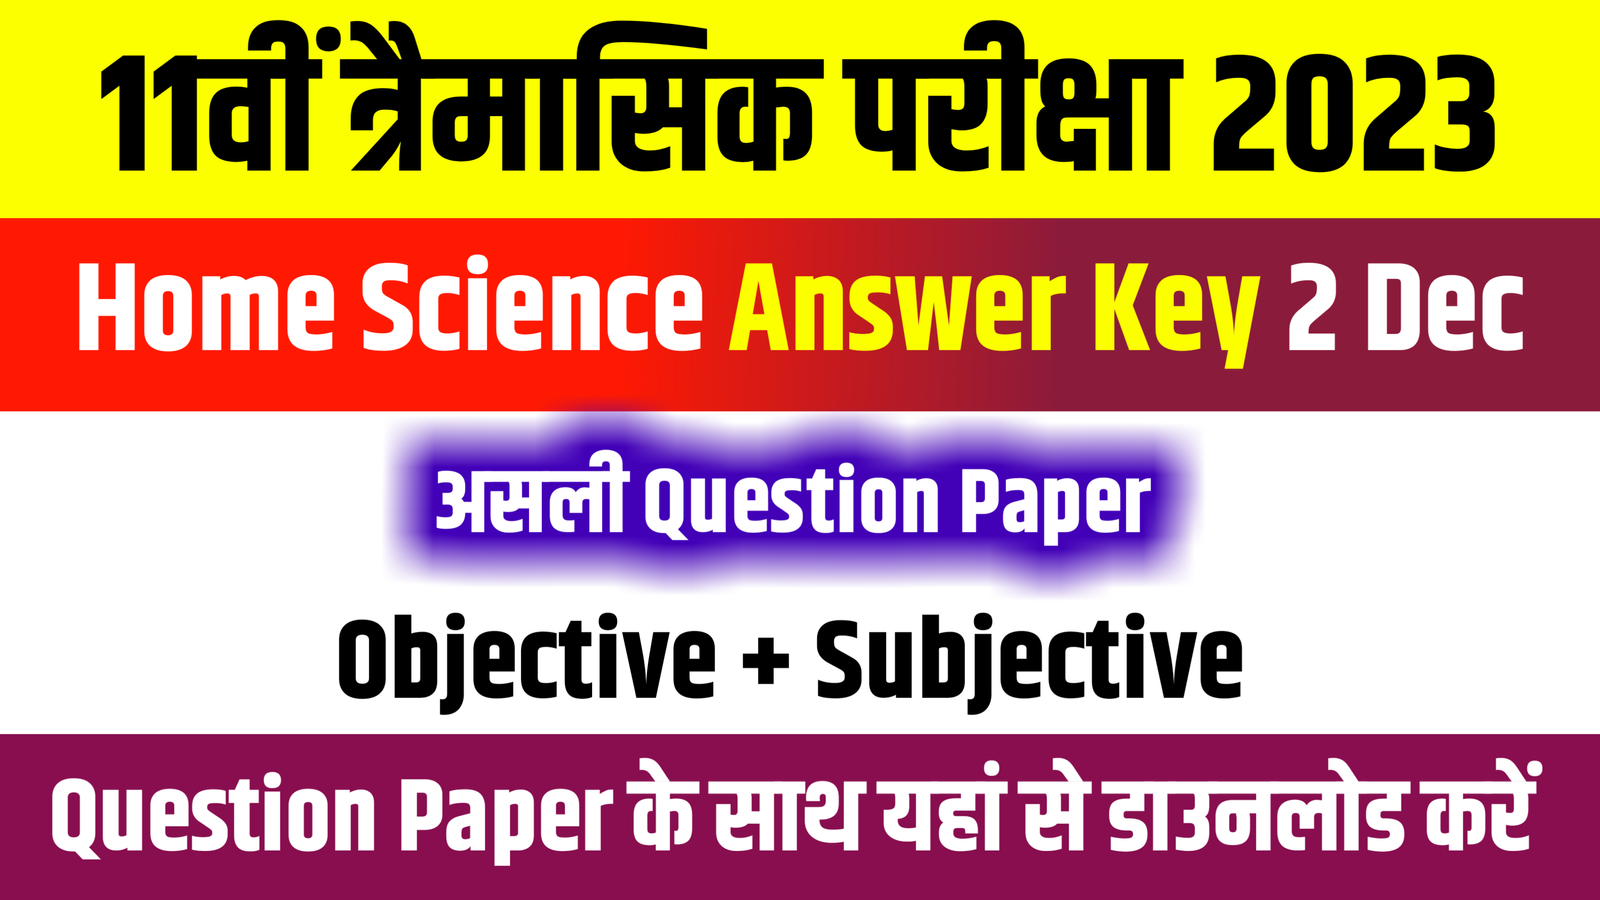 Bihar Board 11th Home Science Objective Subjective: